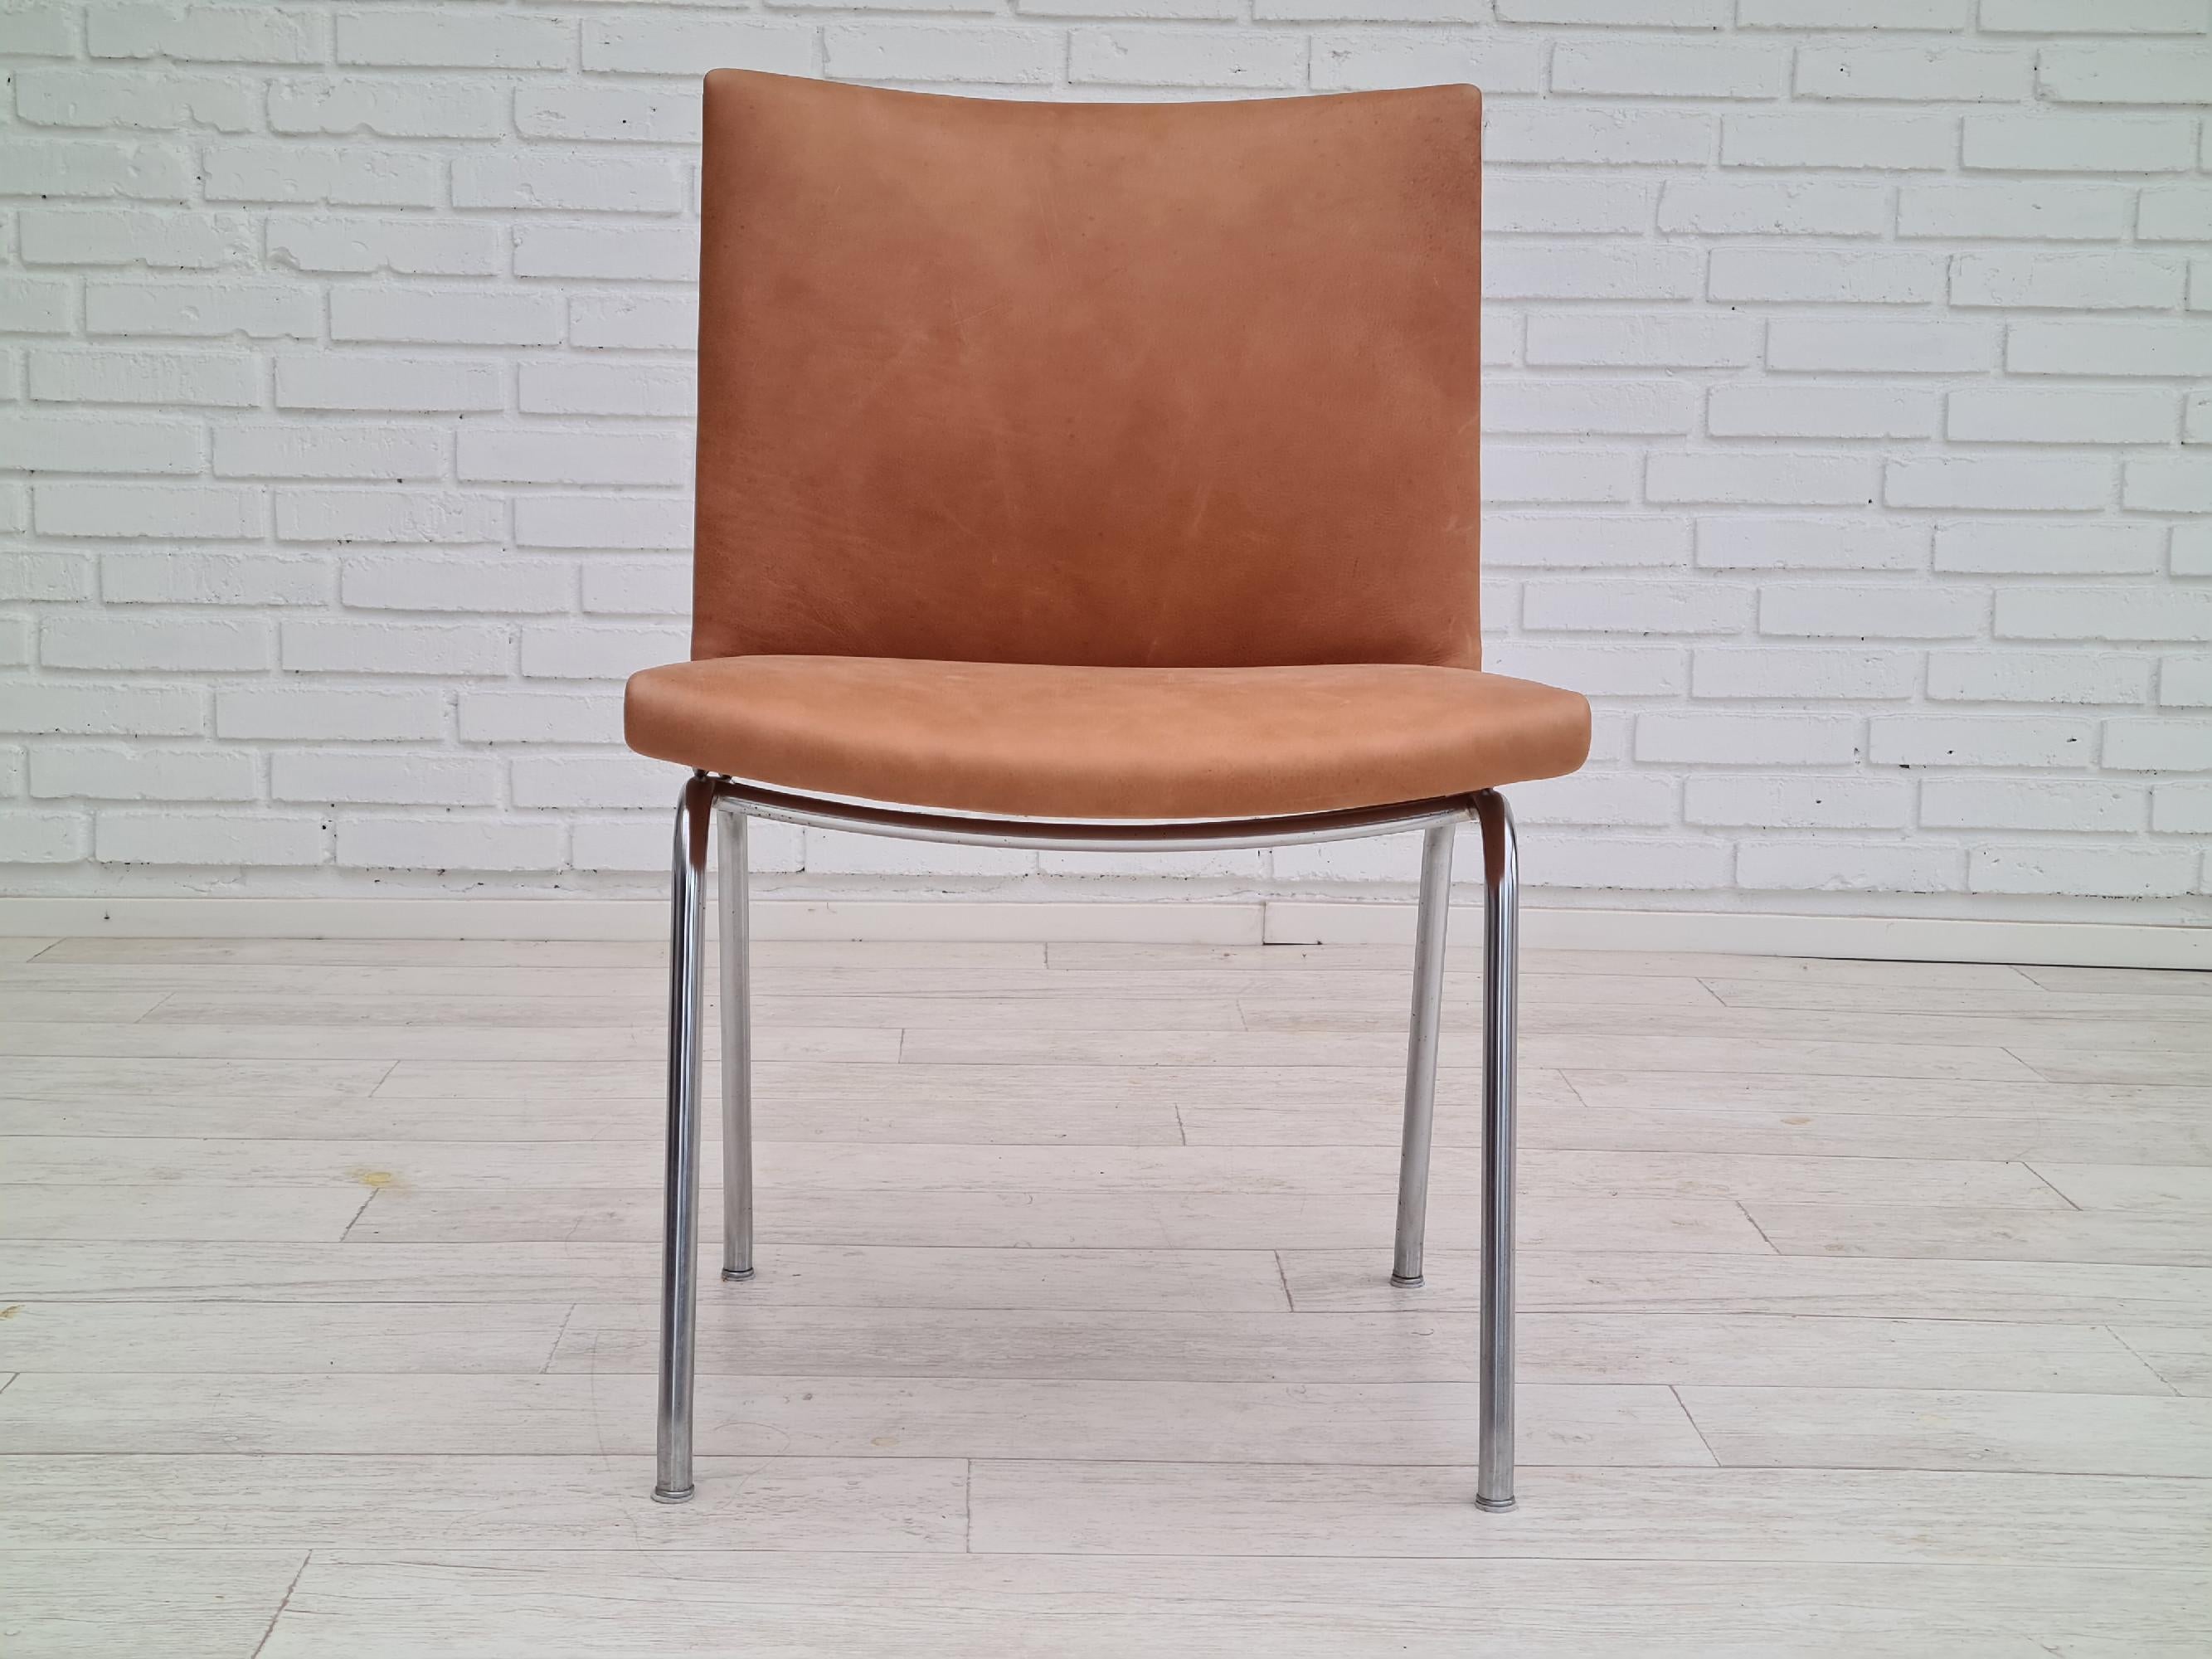 60s, Danish Design by H.J.Wegner, Chair Ap38, Completely Restored, Leather For Sale 7